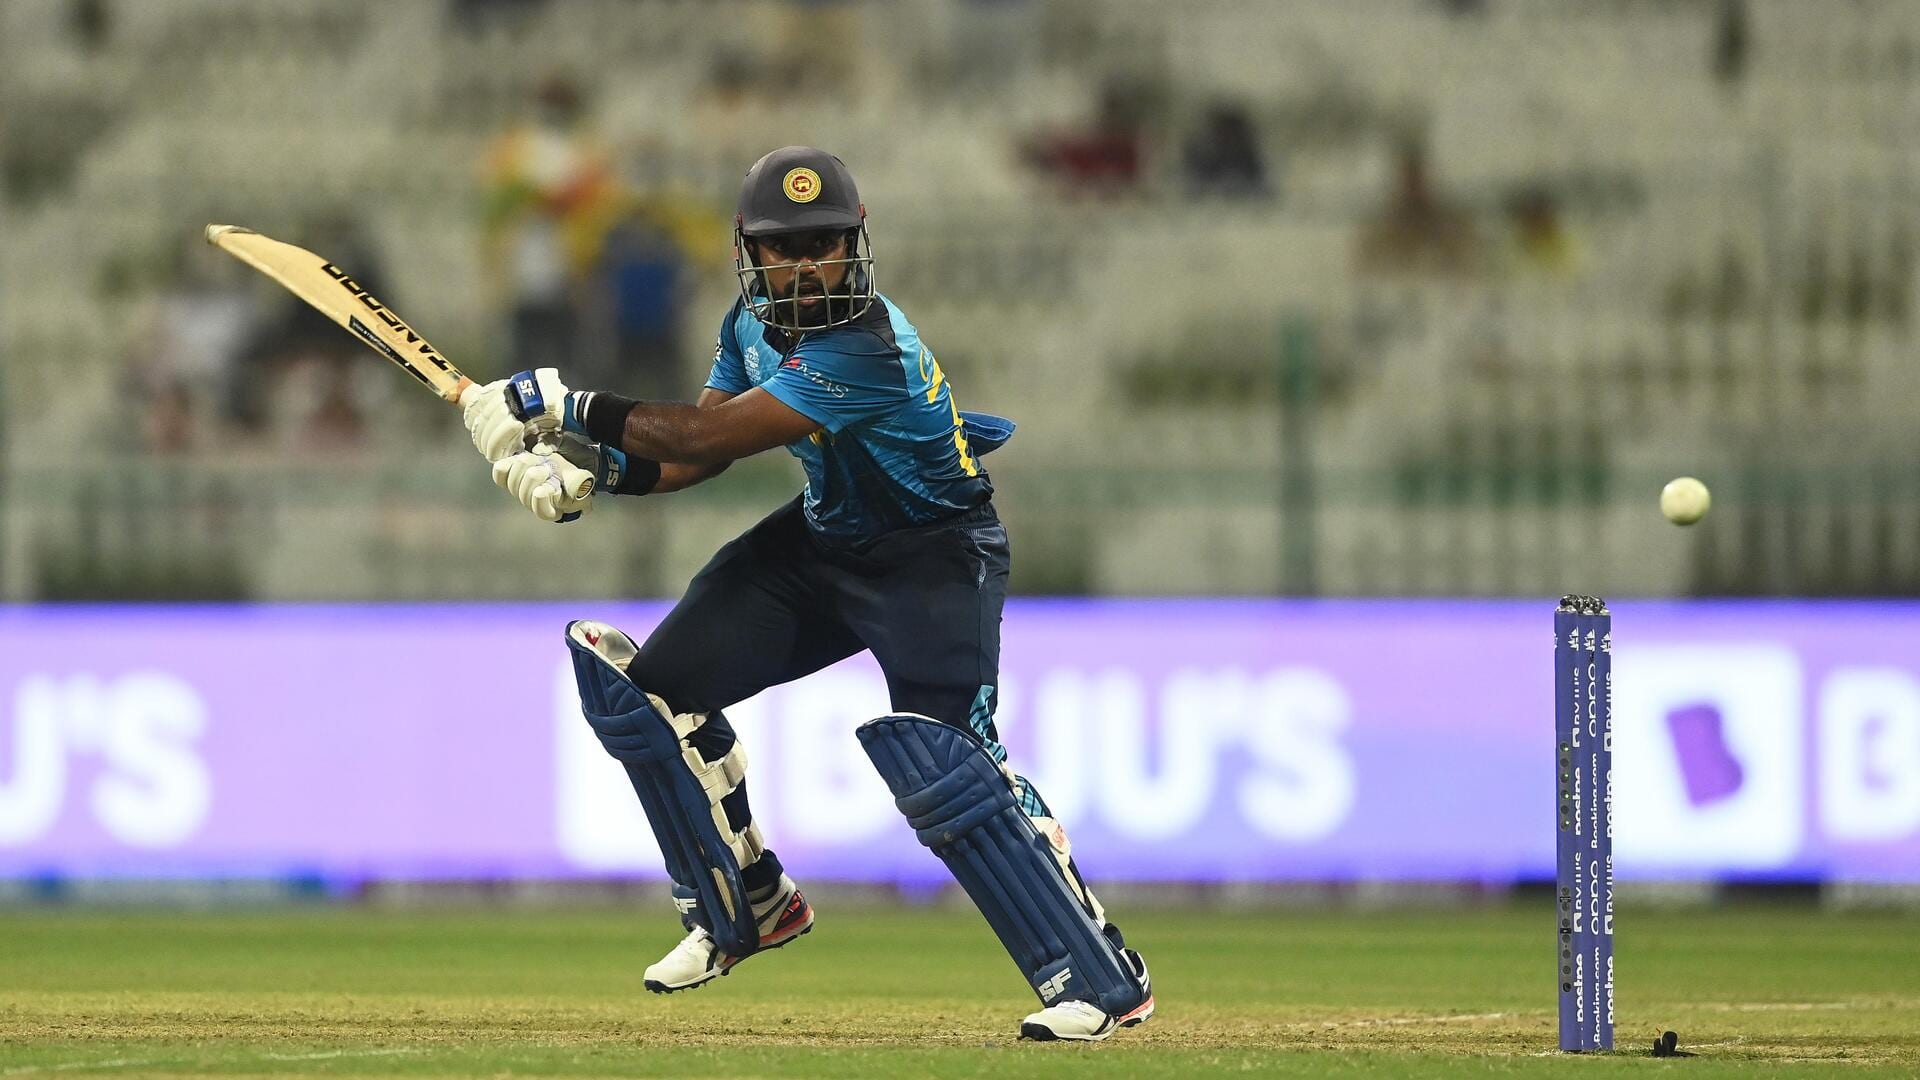 CWC Qualifiers: Charith Asalanka completes 1,000 ODI runs